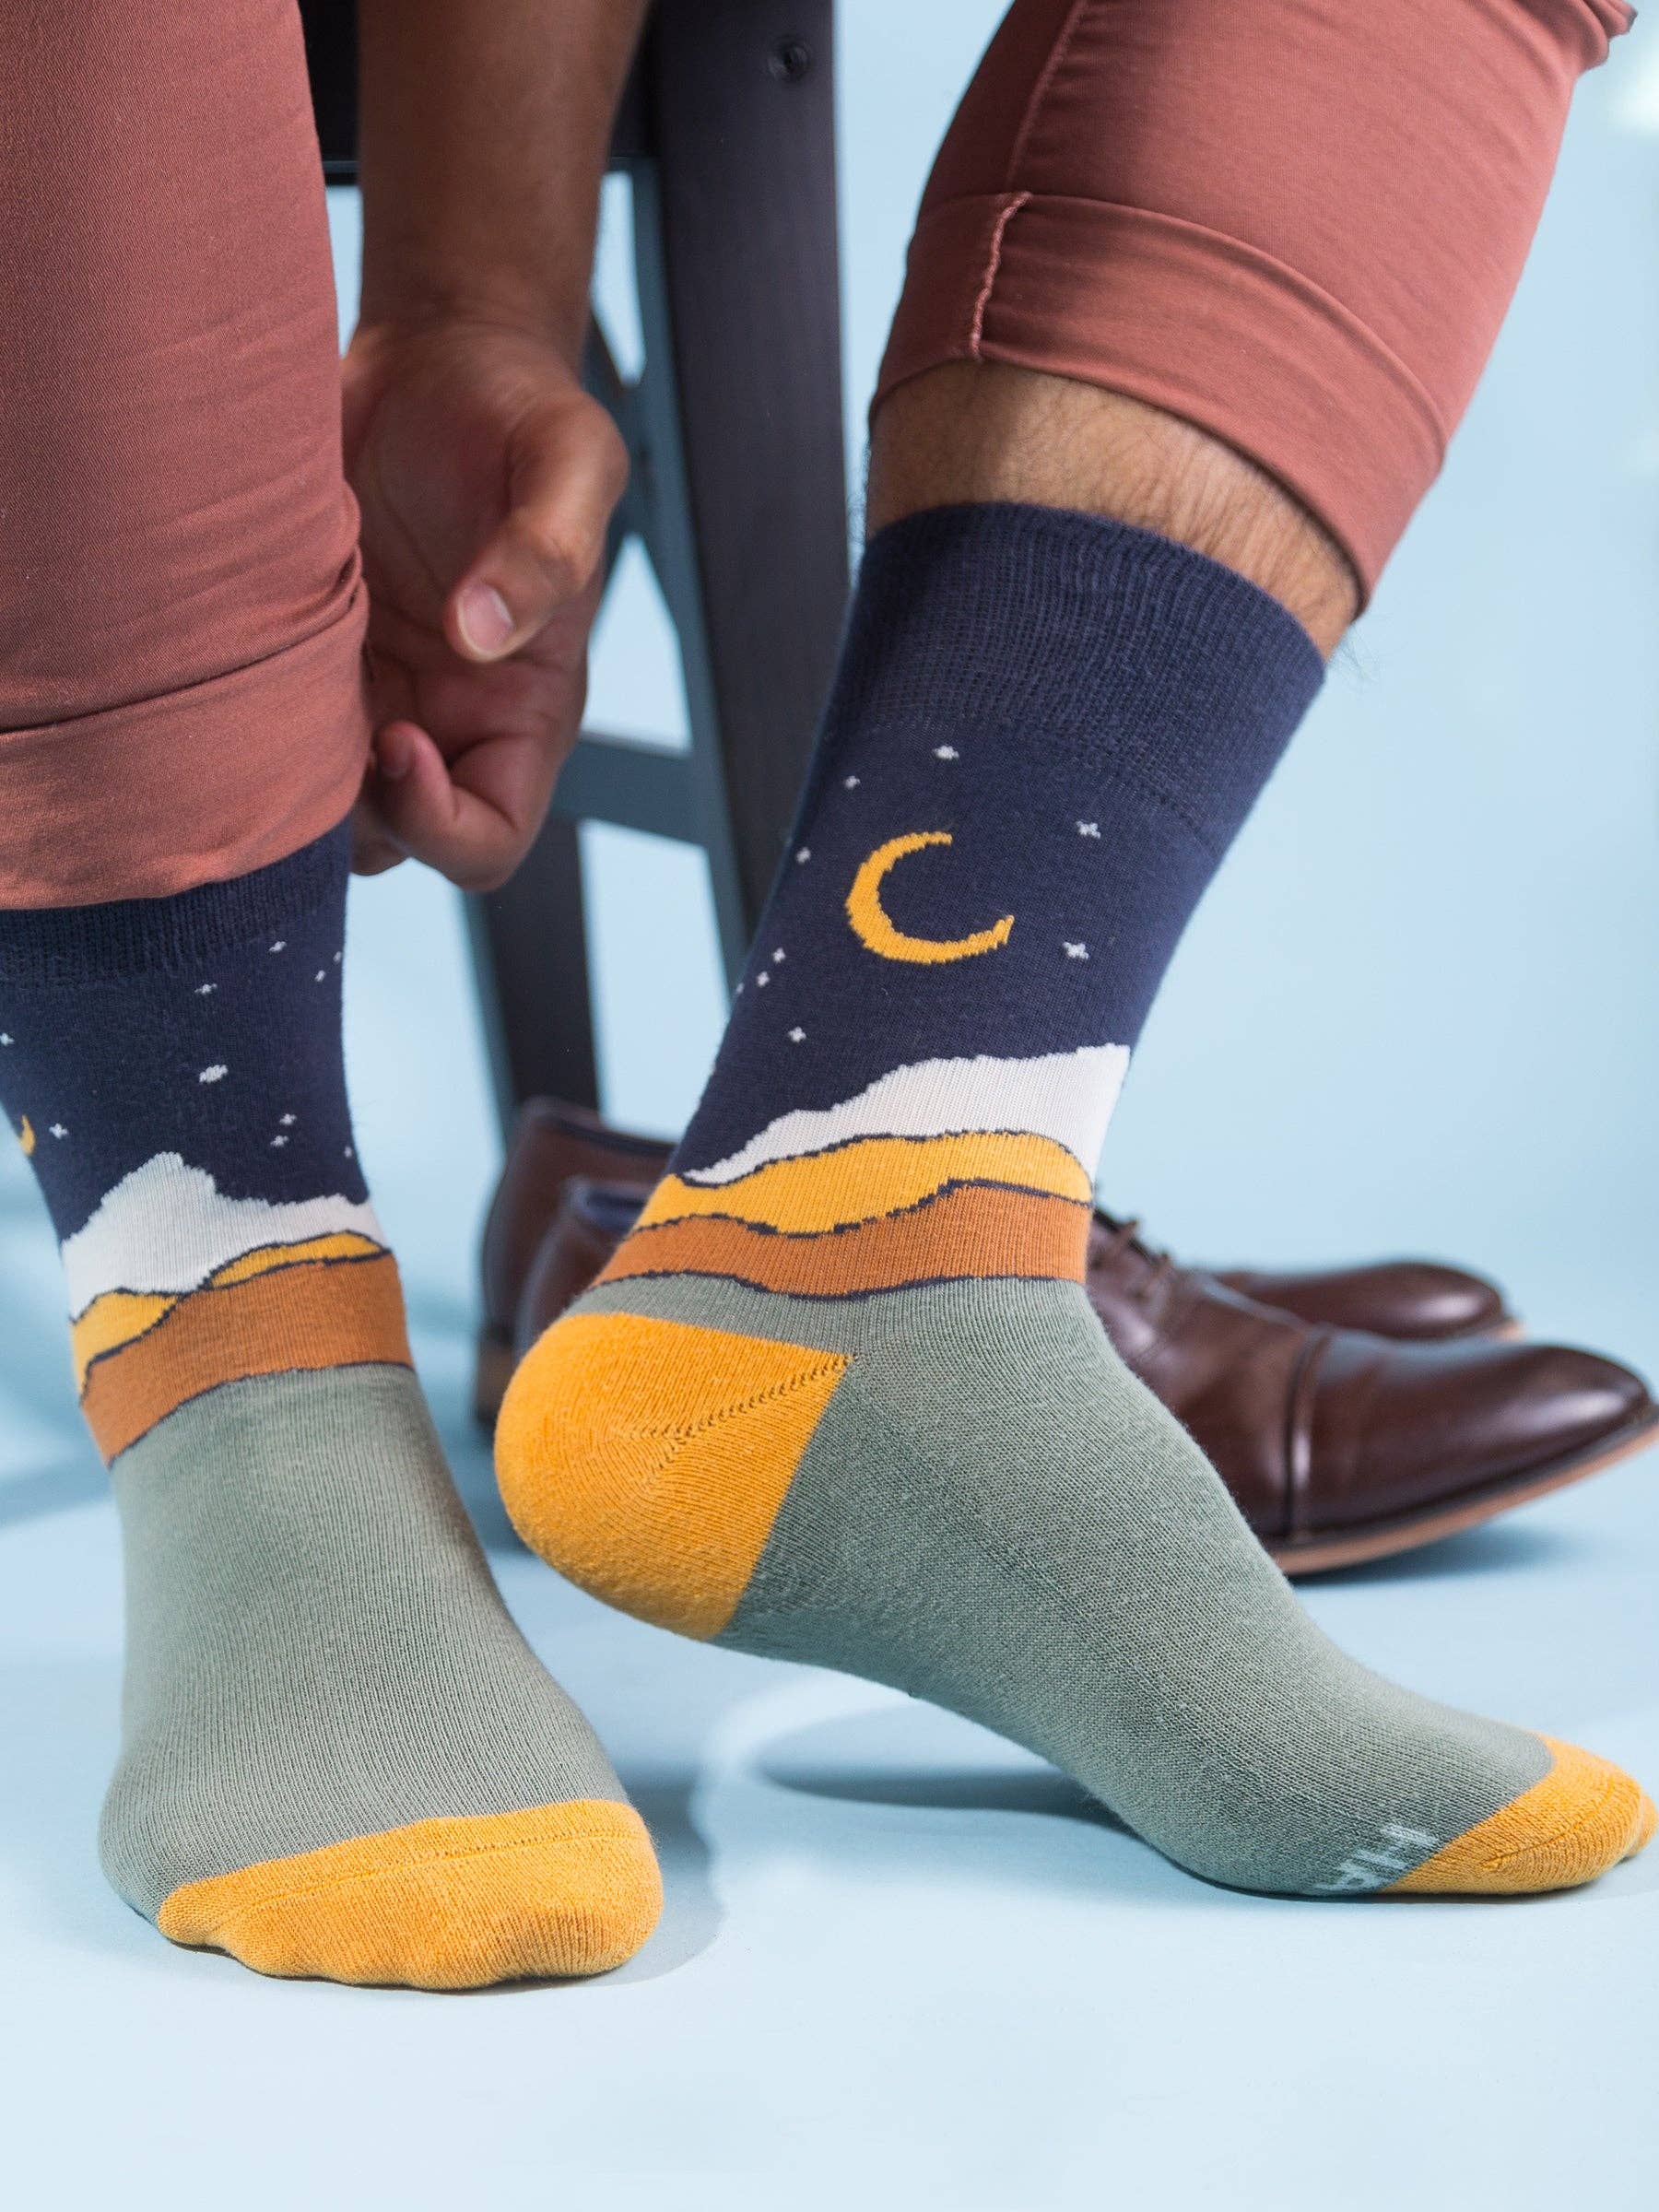 Starry Night Organic Cotton Socks